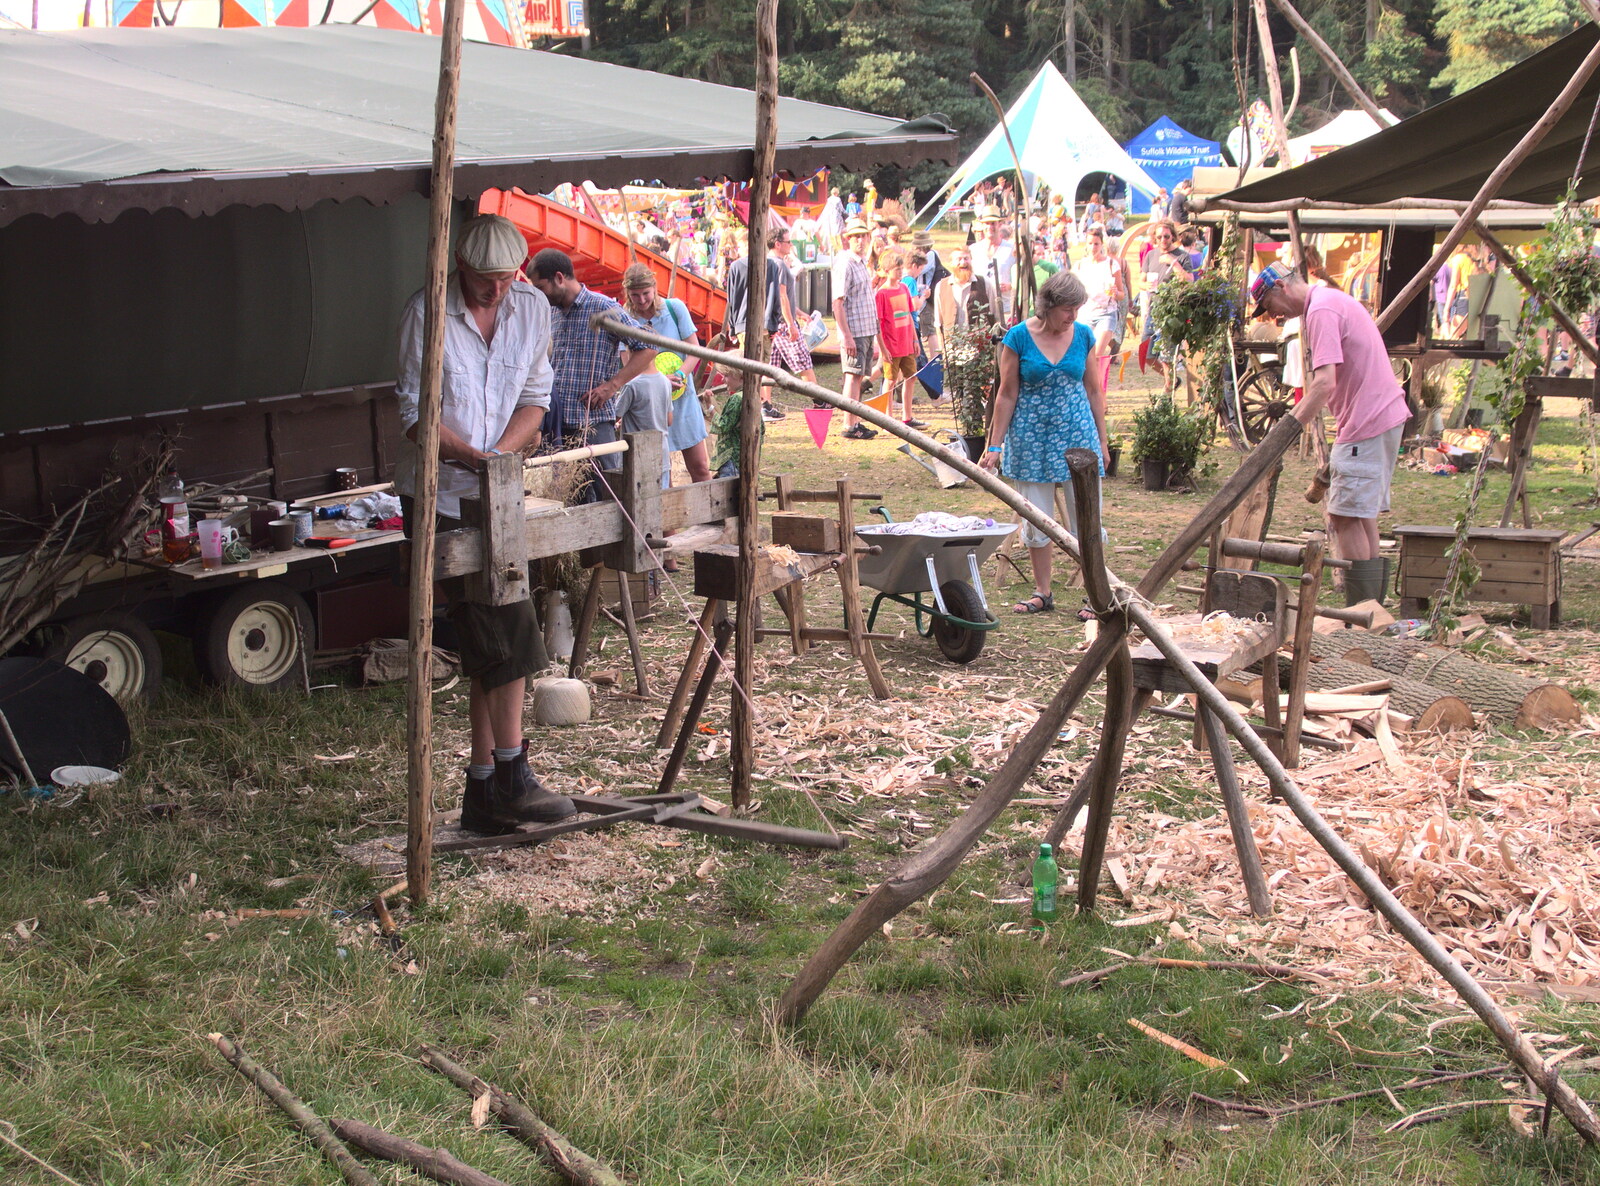 Woodworking activity from Latitude Festival, Henham Park, Southwold, Suffolk - 17th July 2014